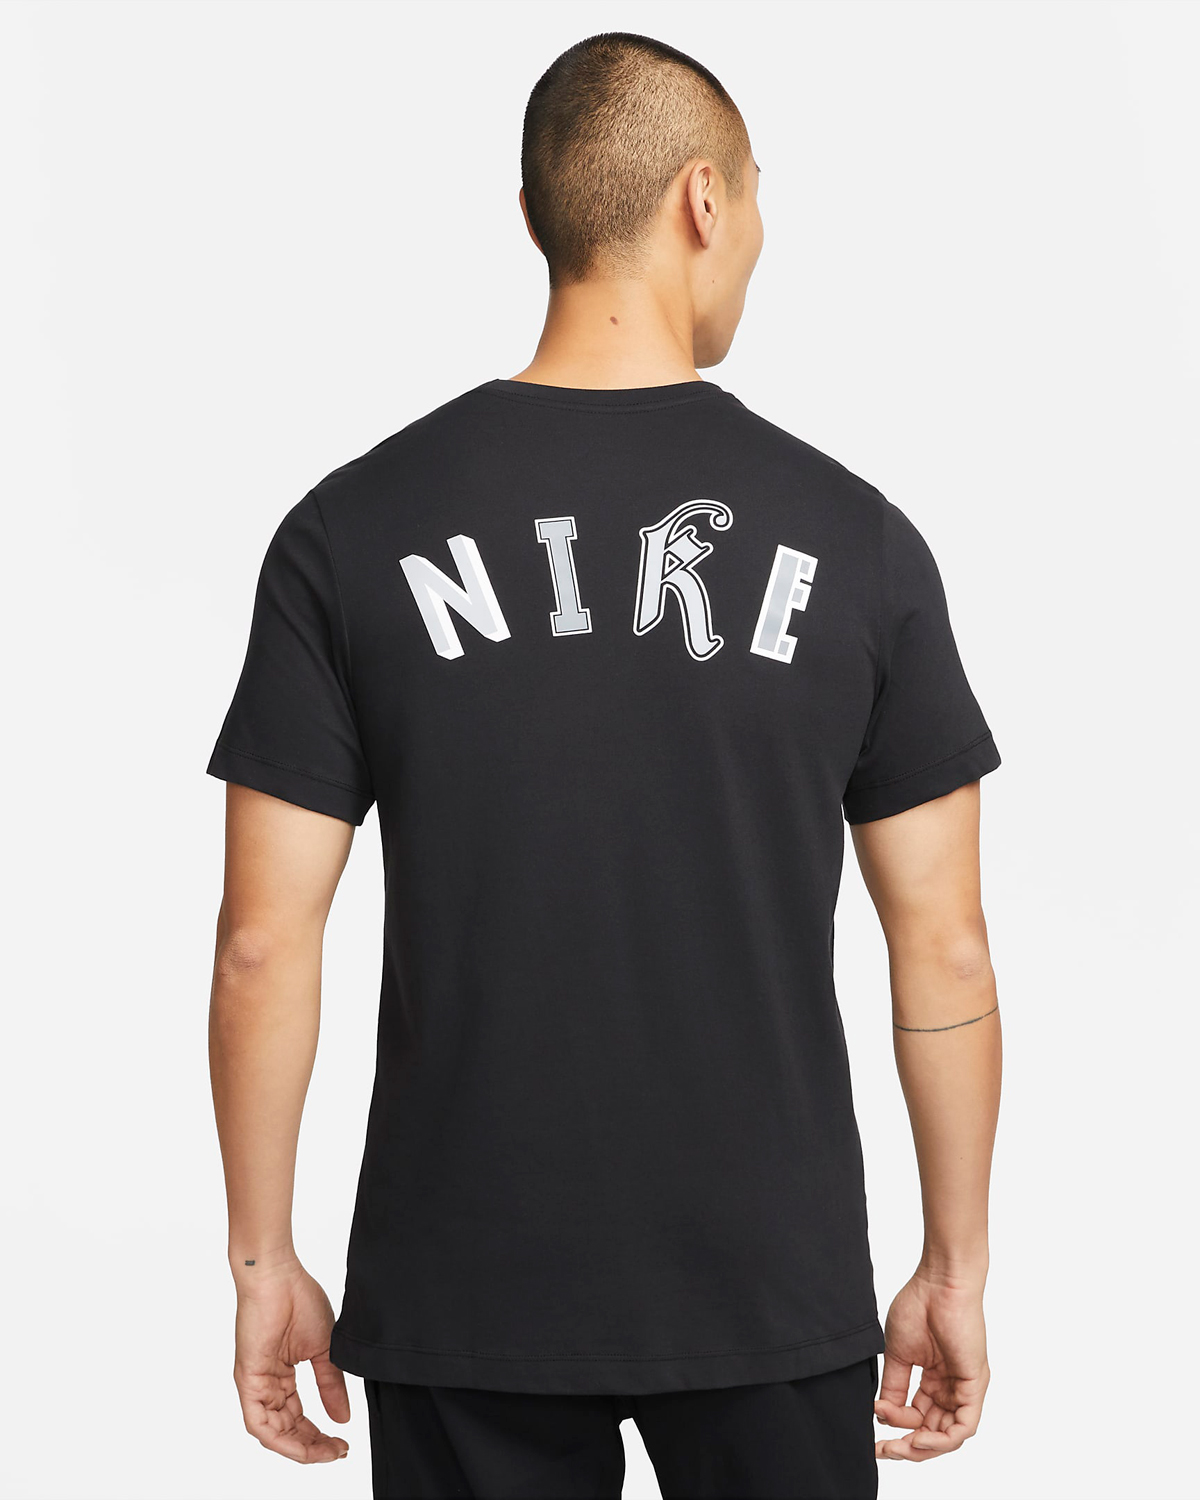 Nike-Basketball-T-Shirt-Black-White-Grey-1